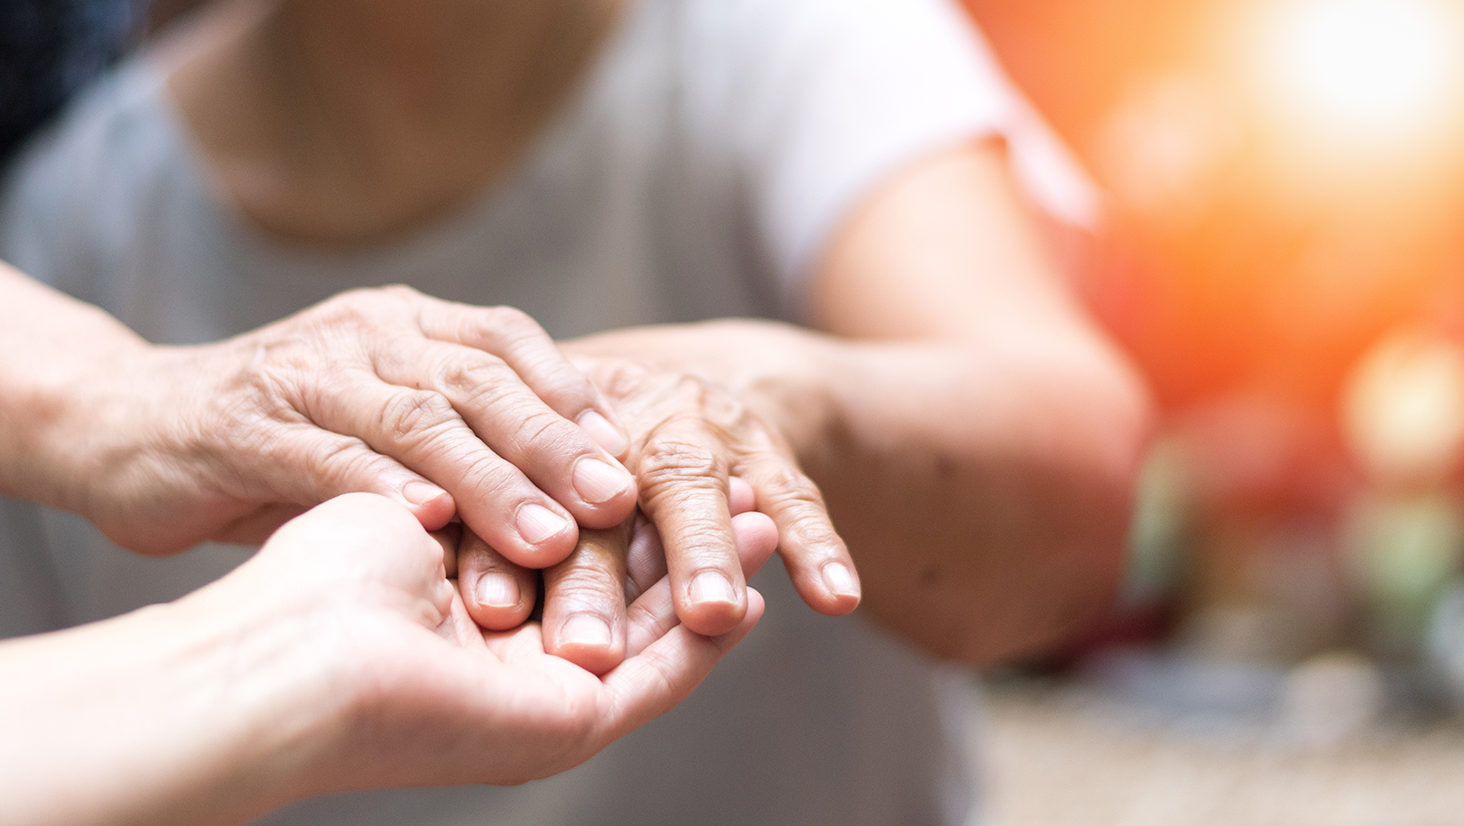 Providing caregiving through Parkinson's Disease is a balancing act